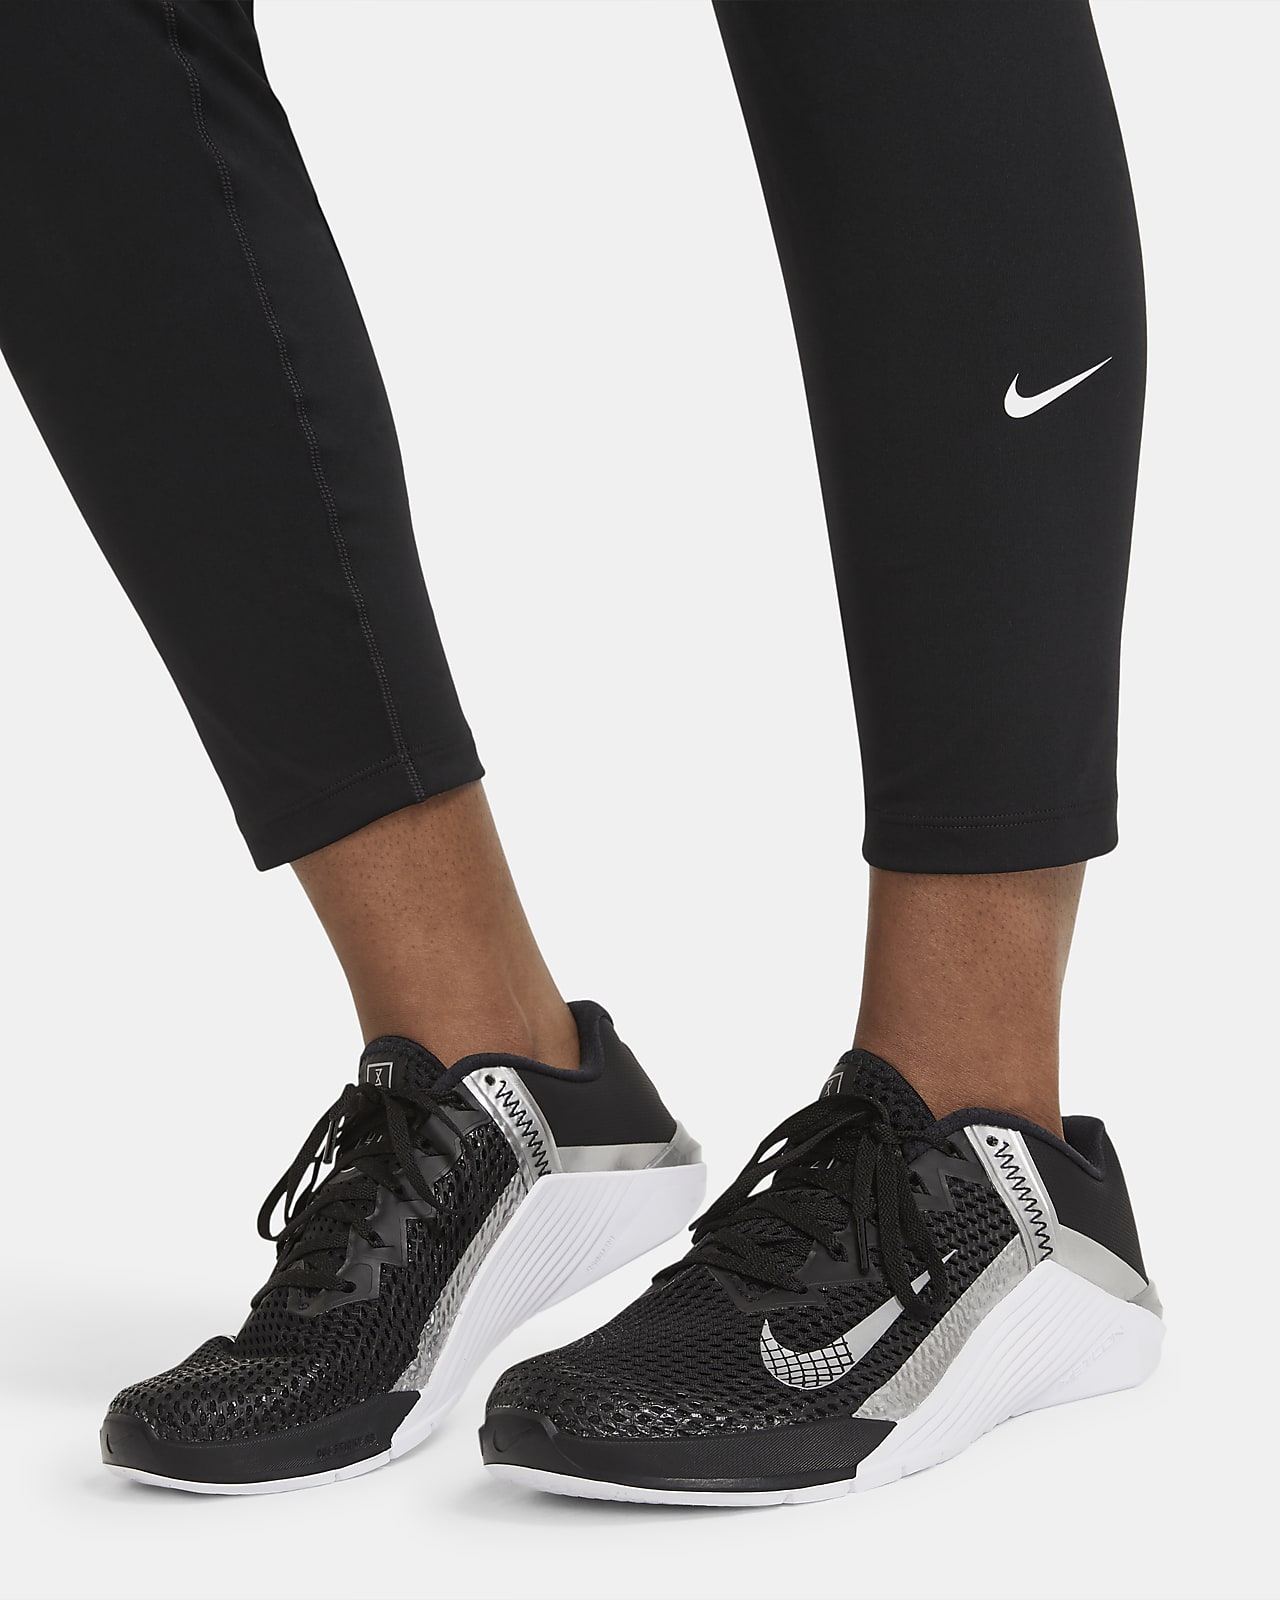 Legging taille mi-haute Nike One pour Femme (grande taille). Nike CA